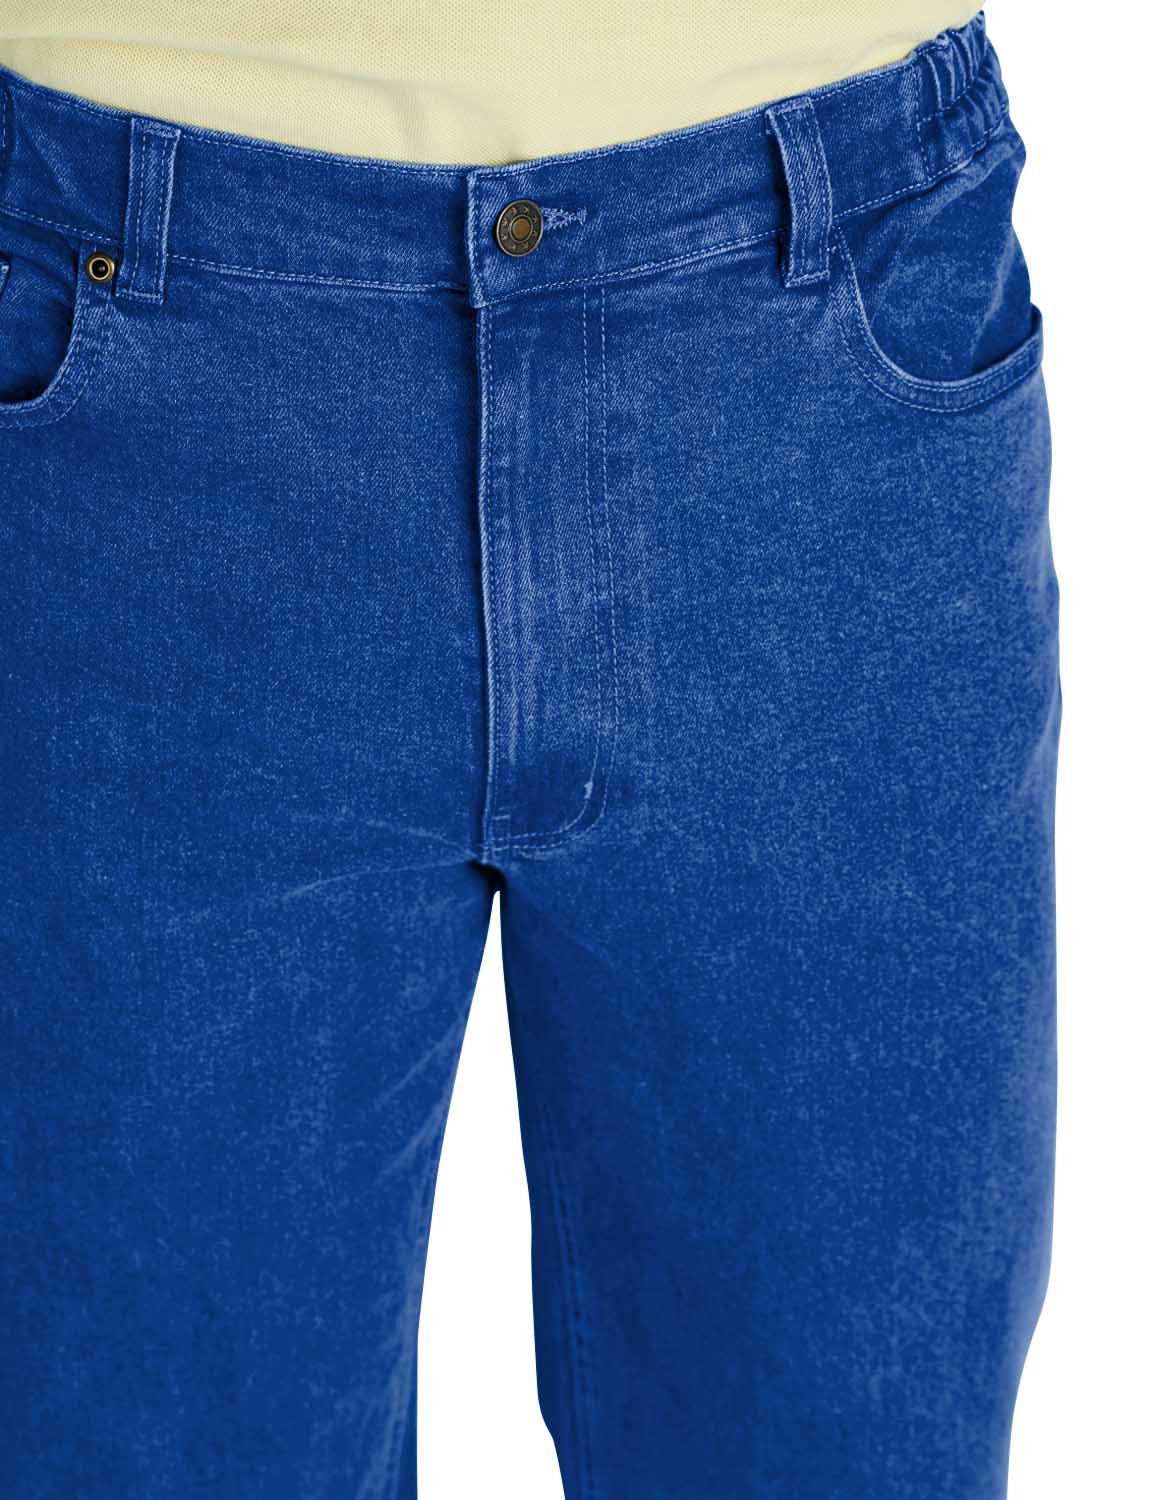 Ladies Pull On & Elasticated Jeans - Chums